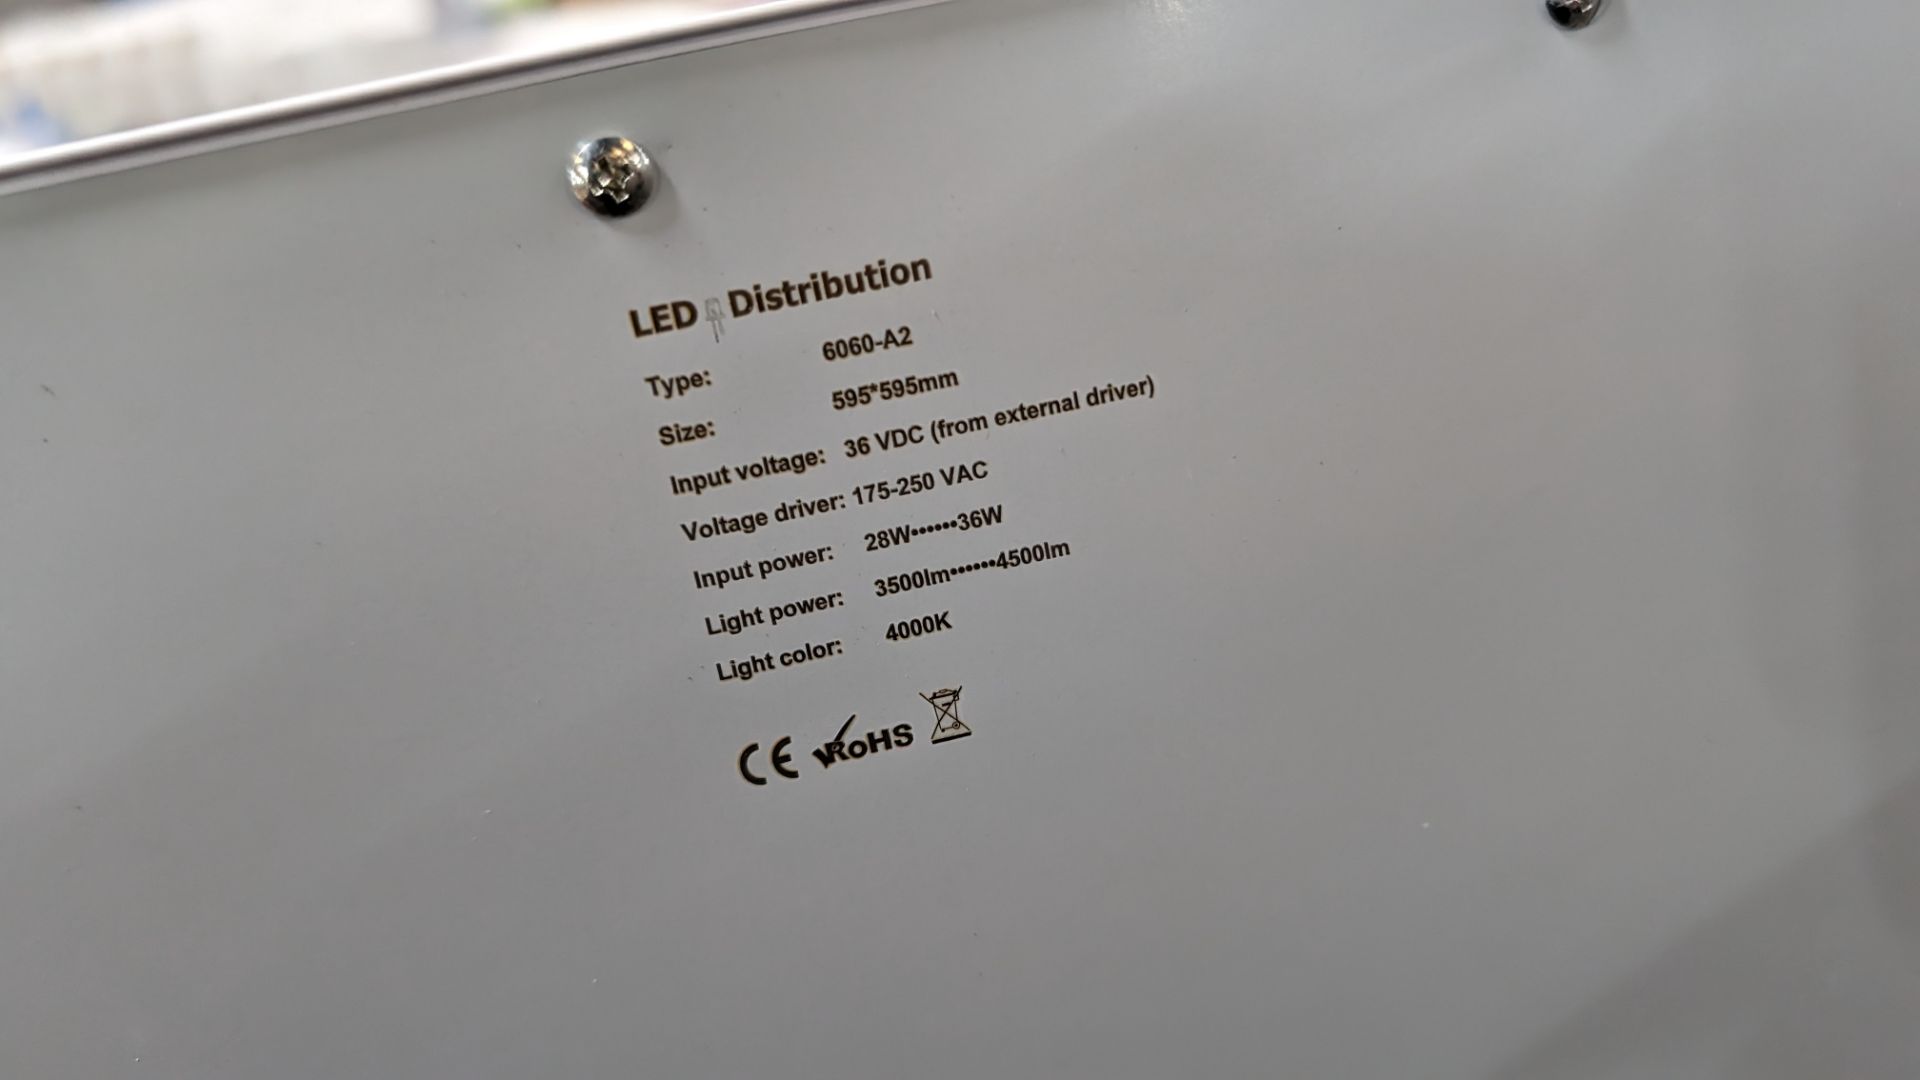 20 off Elegance Premium Eco 595mm x 595mm LED lighting panels. 4000k. 28/36w input power. 36w dri - Image 9 of 14